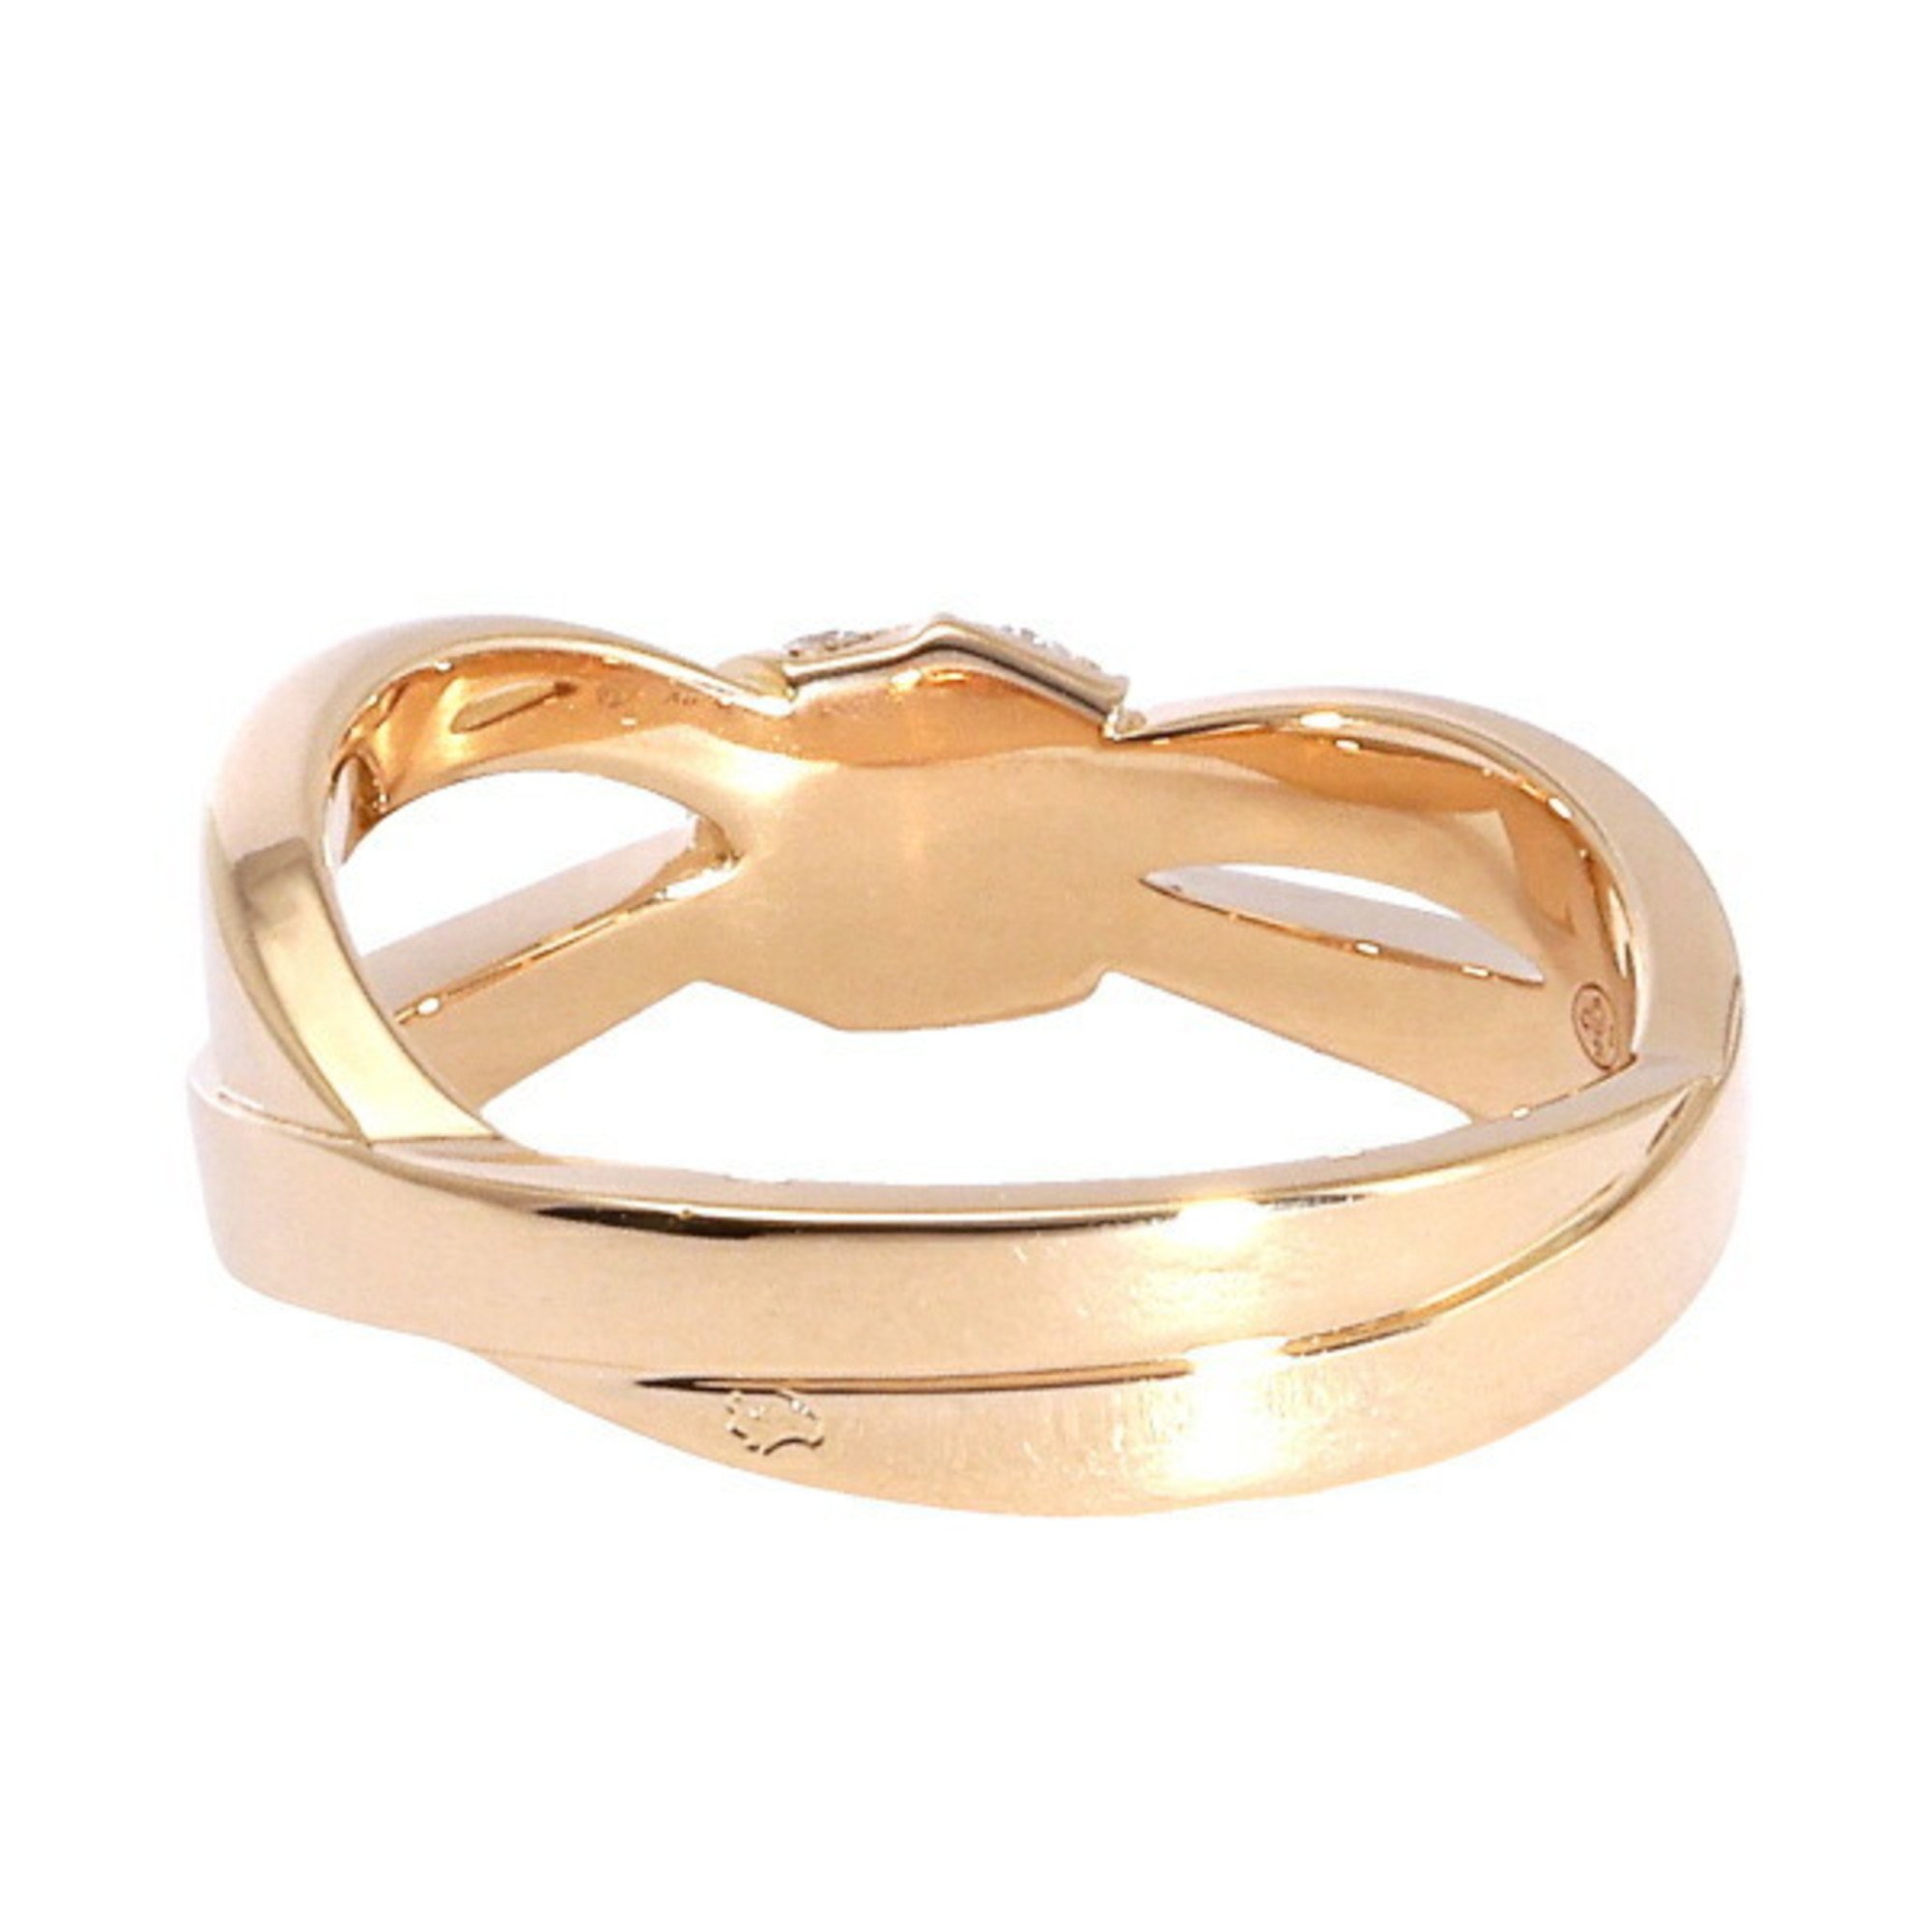 Chaumet Lien Séduxion K18PG pink gold ring